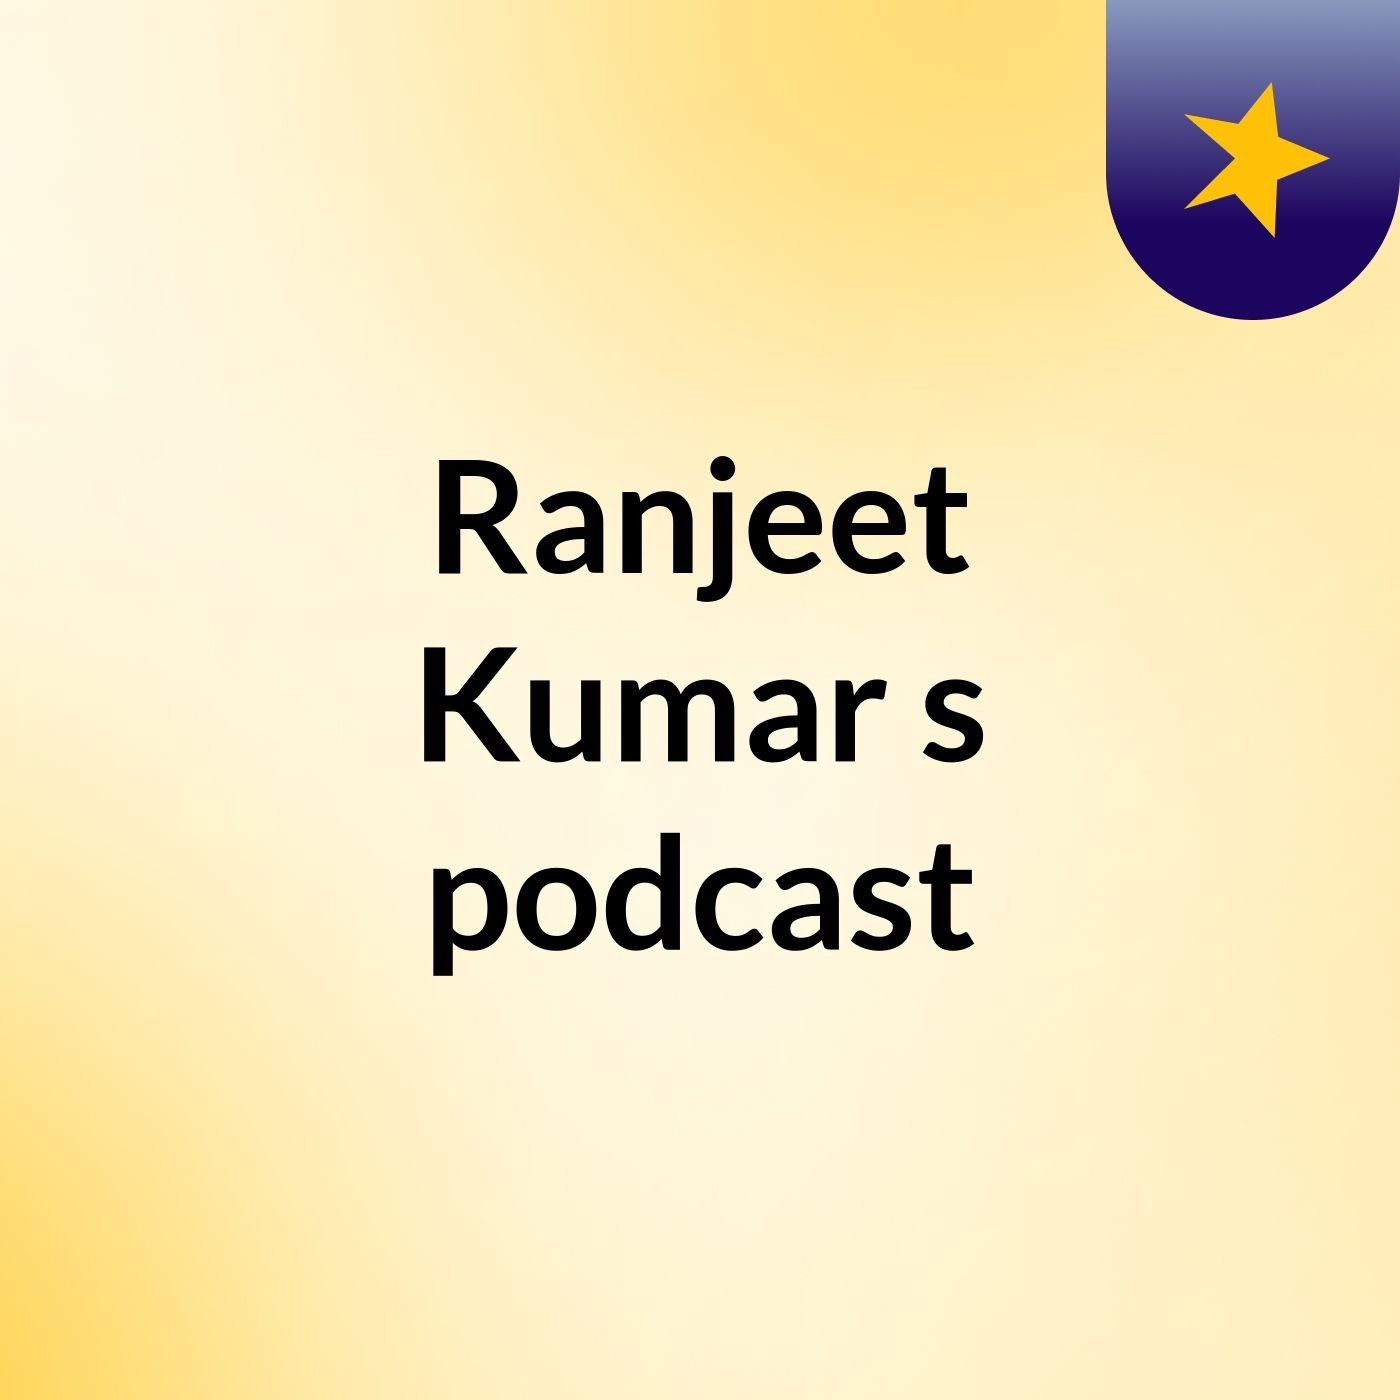 Ranjeet Kumar's podcast